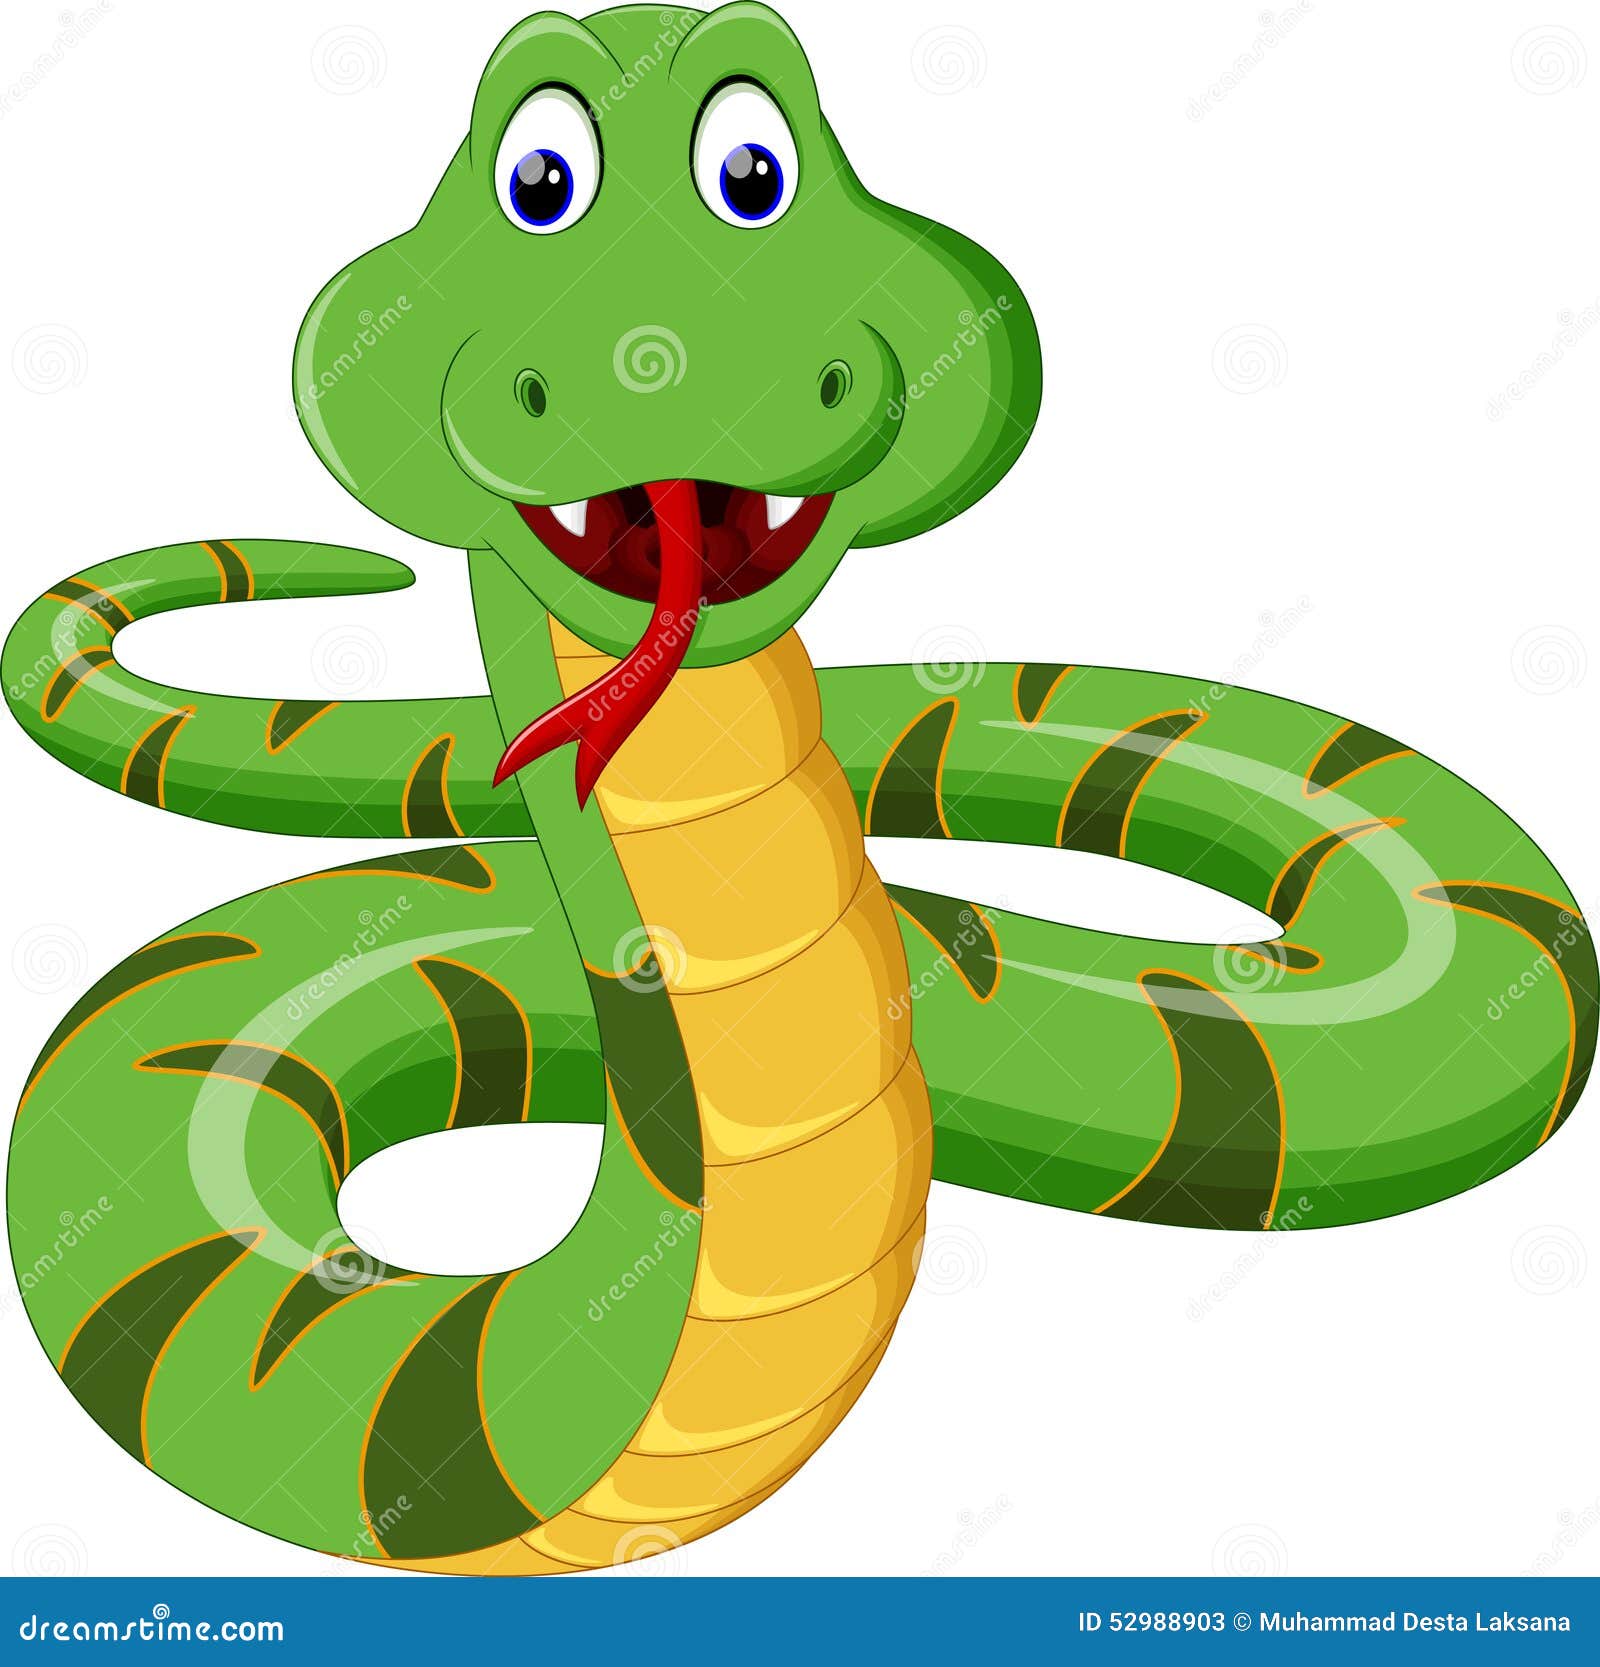 Snake Cartoon Stock Illustration - Image: 52988903